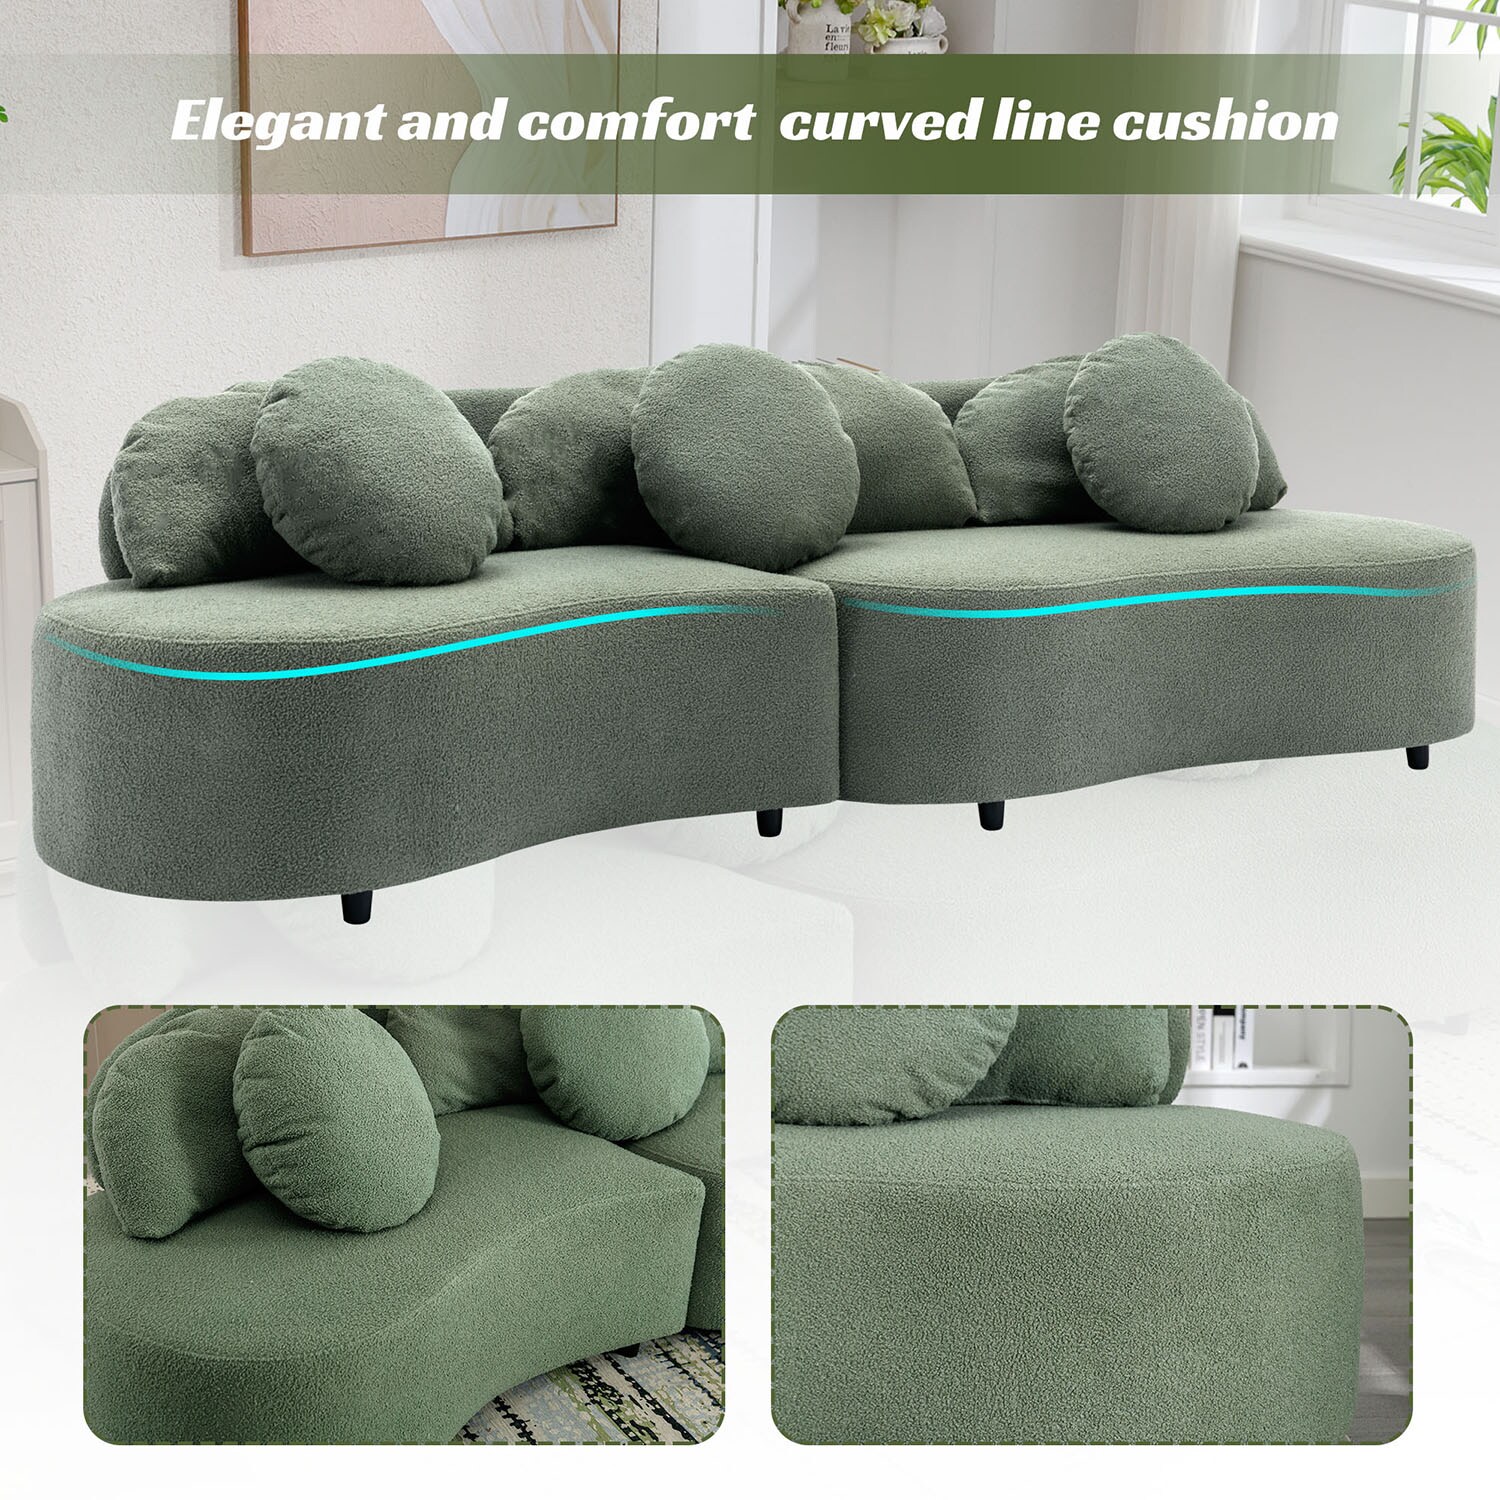 Lamb Velvet Cover Sofa Cushion Thickened Insulation Anti Slip Dust